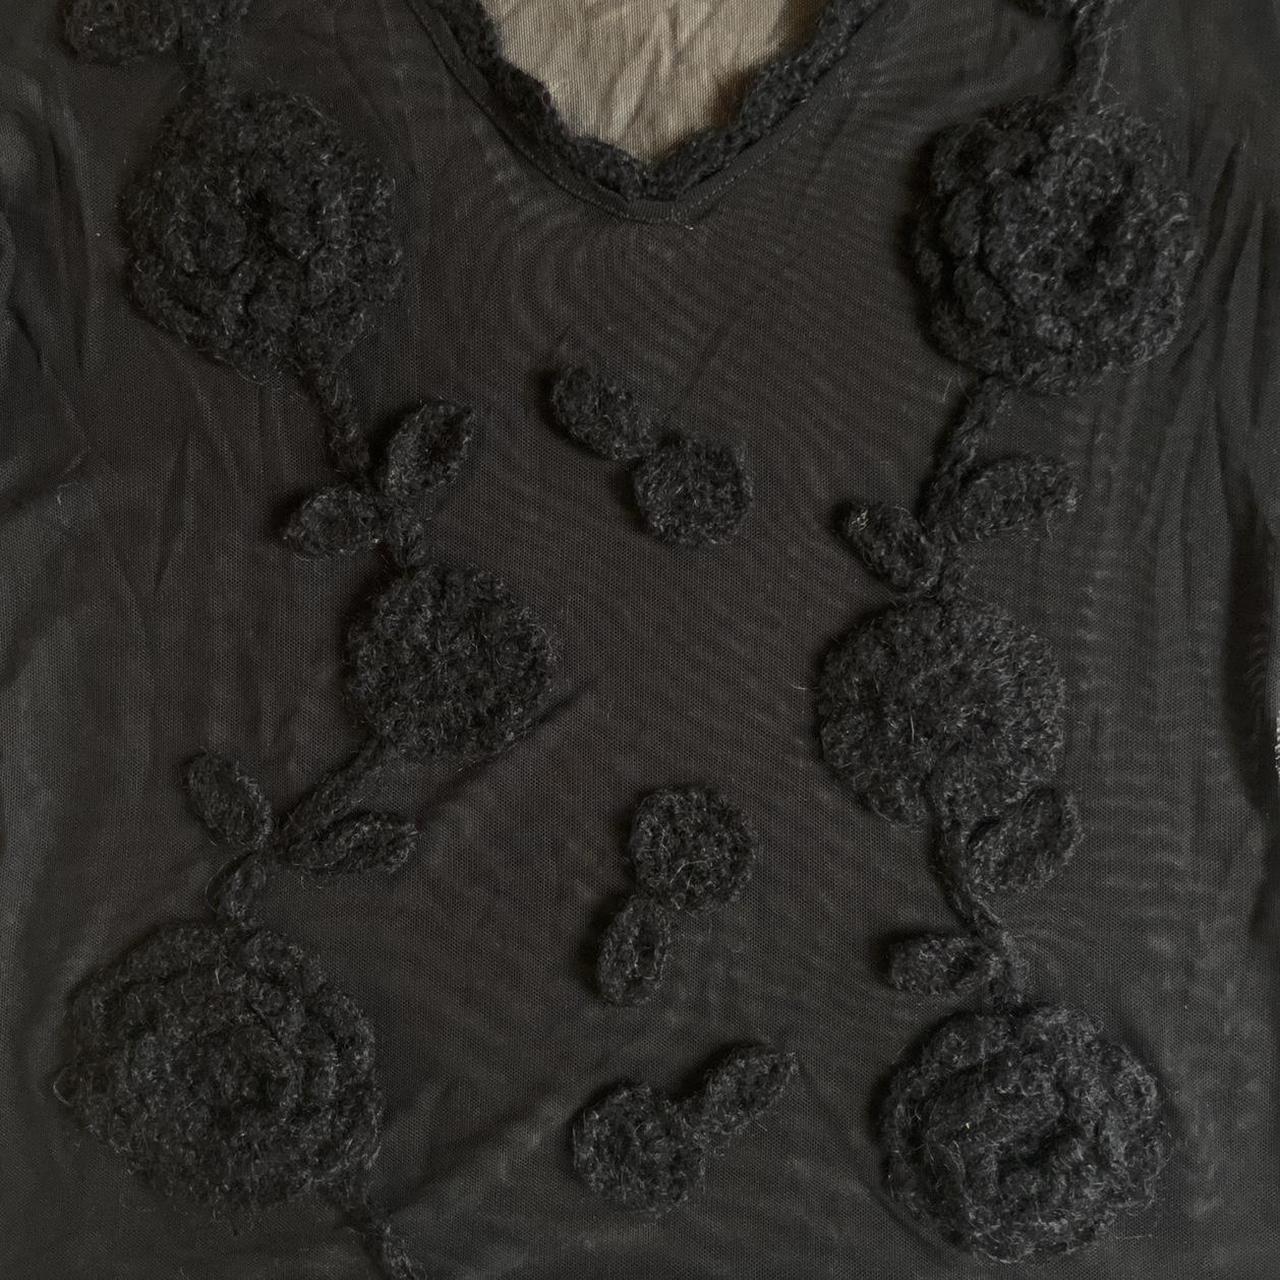 Product Image 3 - 🕸 Italian black mesh top